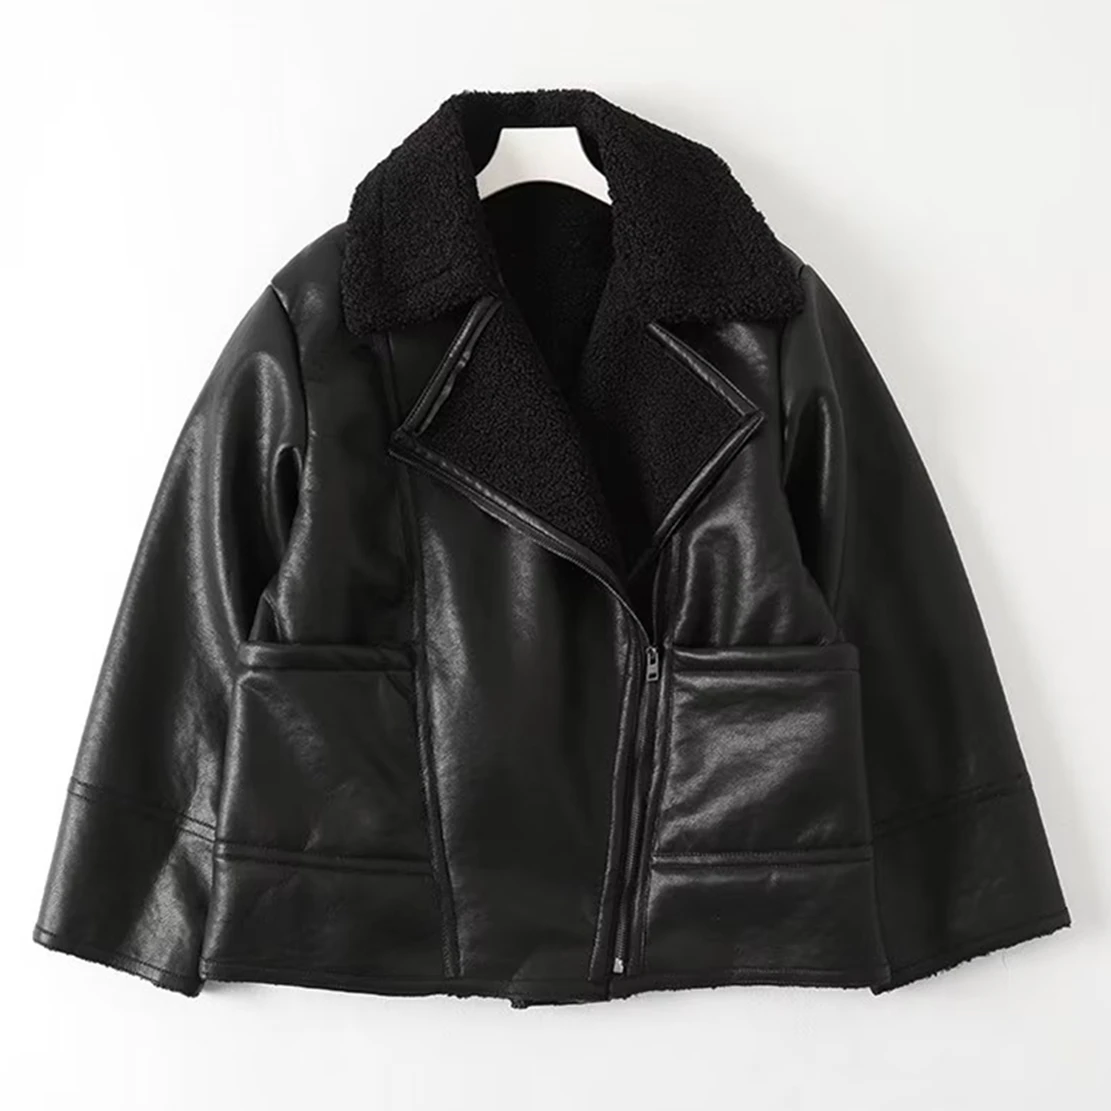 

Jenny&Dave England High Quality Vintage Pockets Sherpa Warm Leather Jacket Winter Coat WOmen